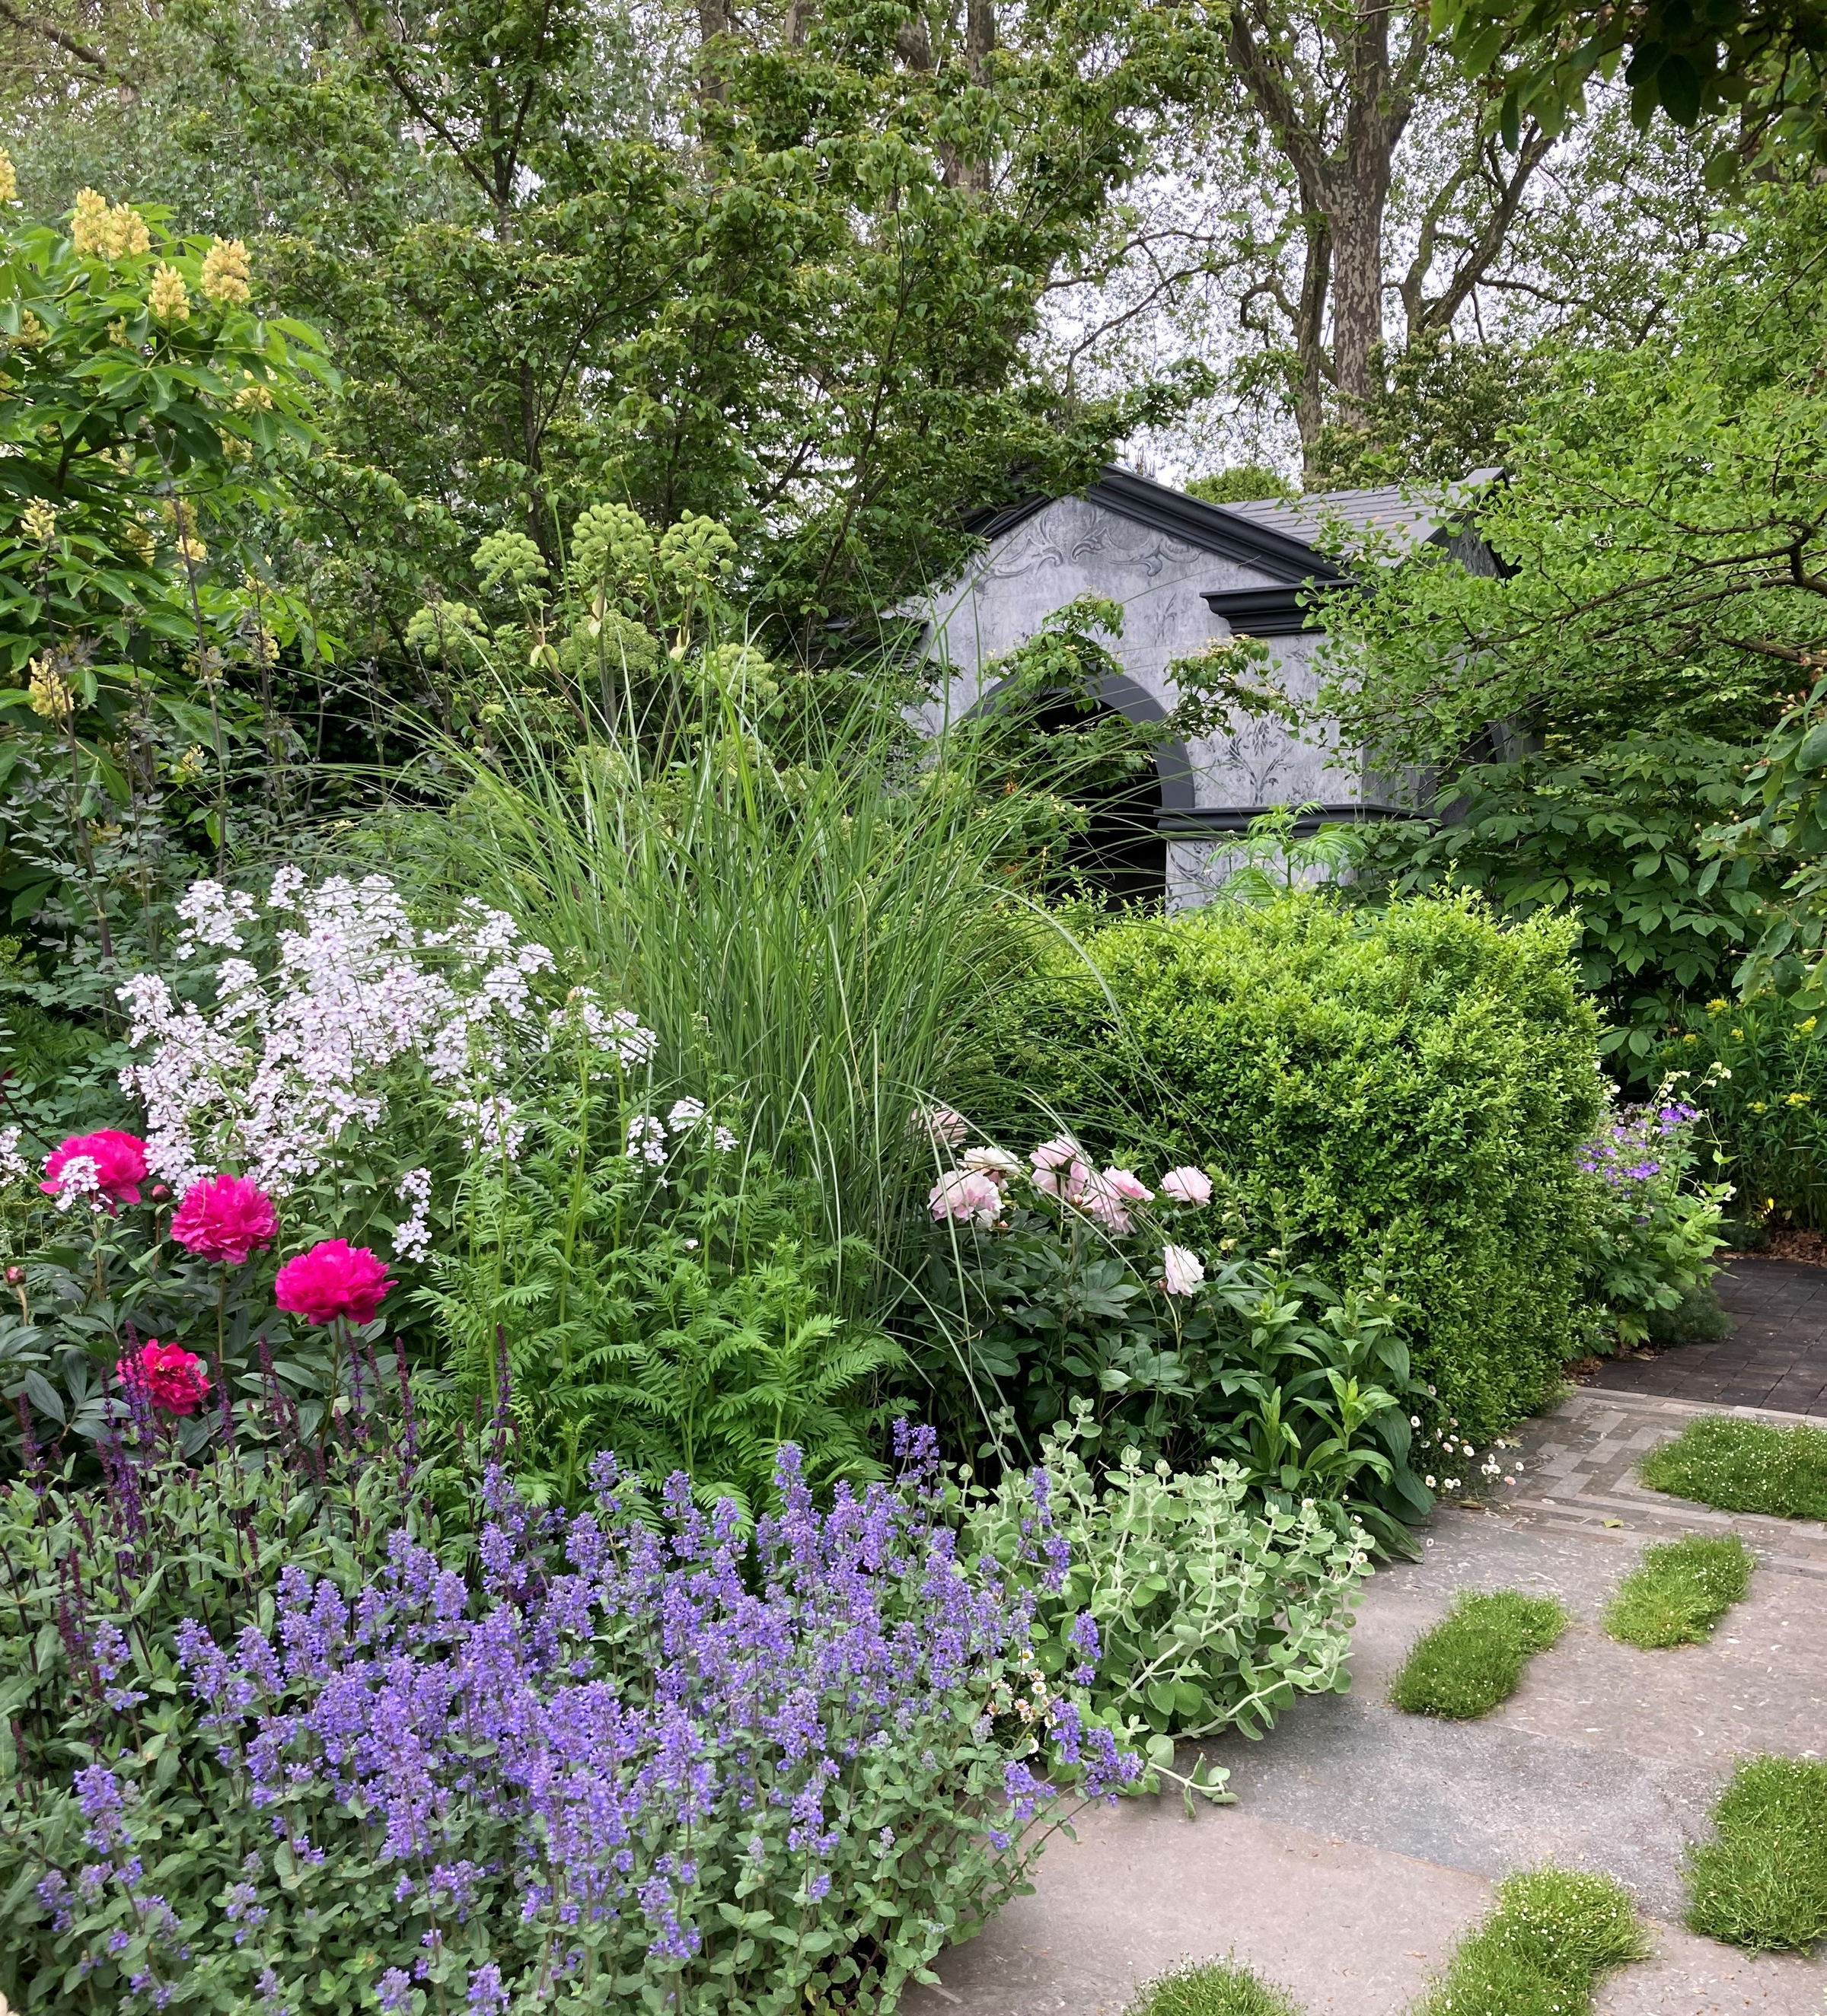 Chris Beardshaw's A Life Worth Living Garden